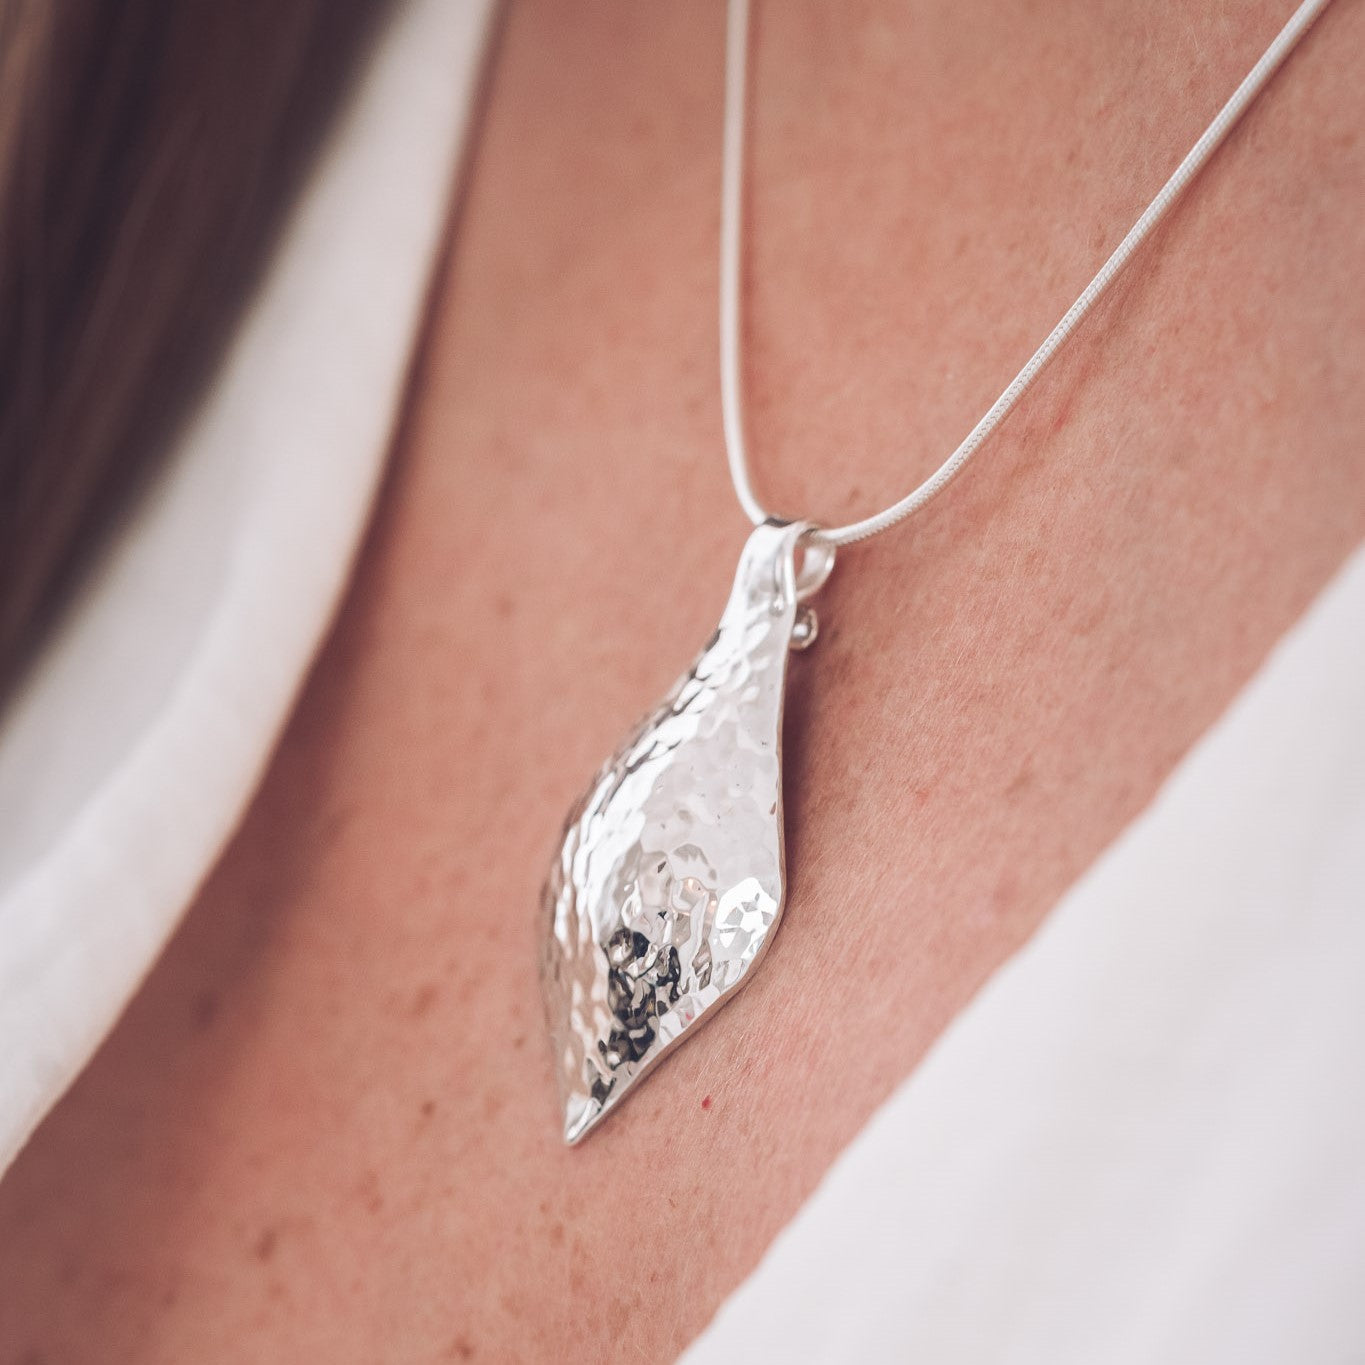 Handmade hammered teardrop silver pendant